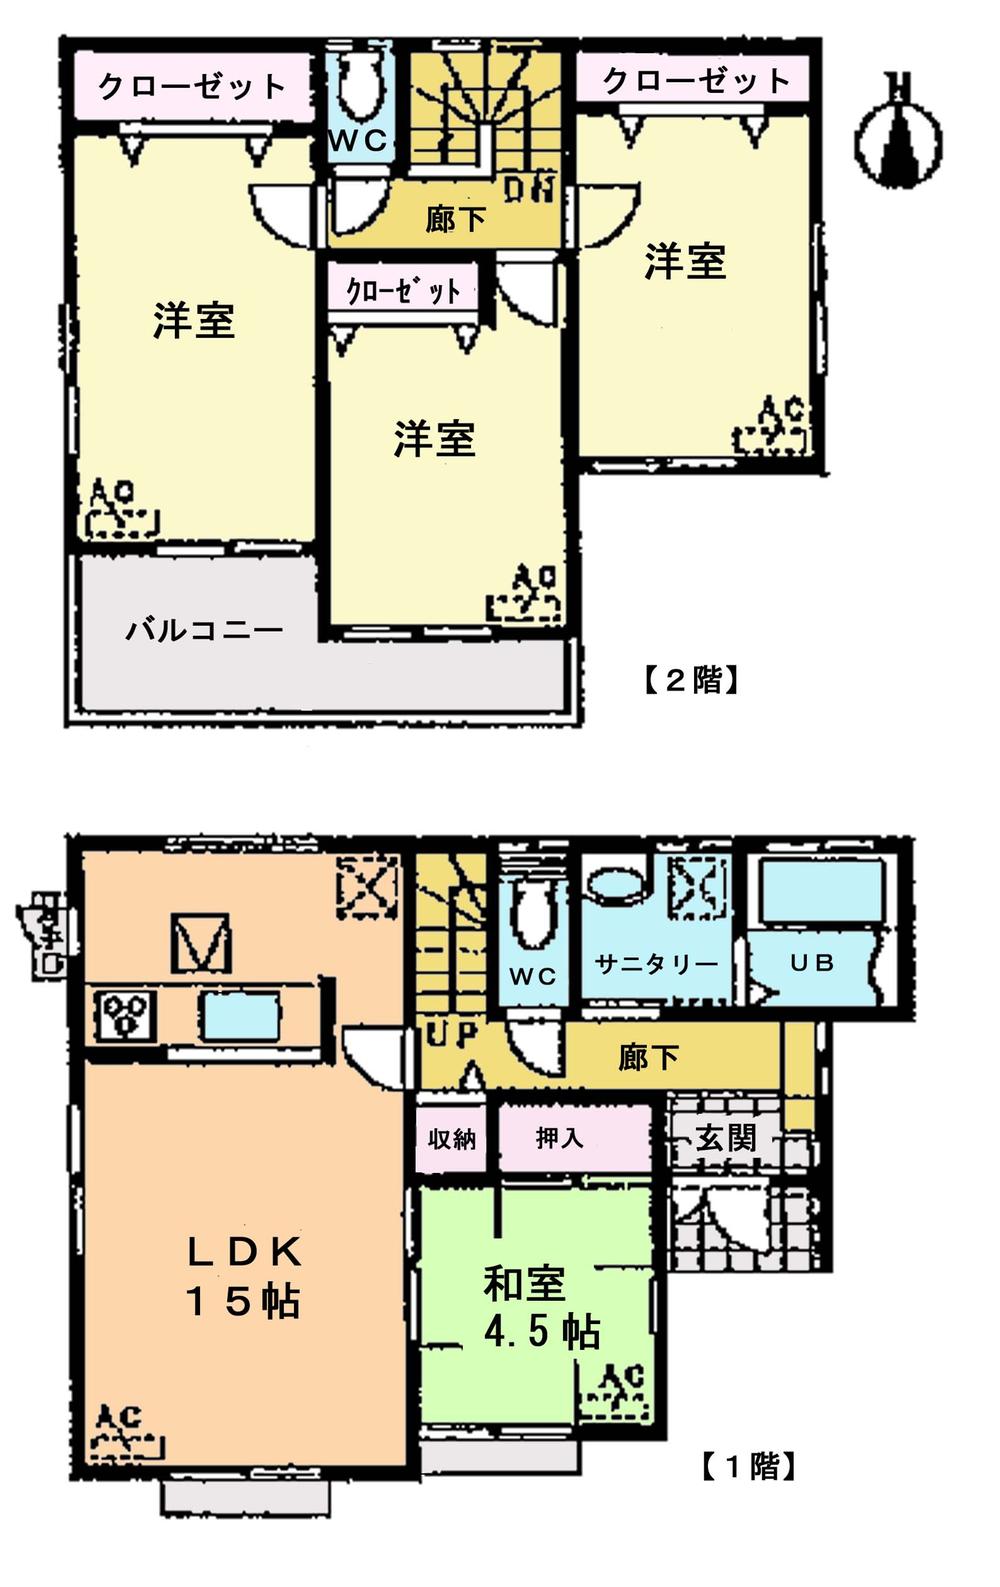 Floor plan. (1 Building), Price 28.8 million yen, 4LDK, Land area 133.2 sq m , Building area 95.24 sq m